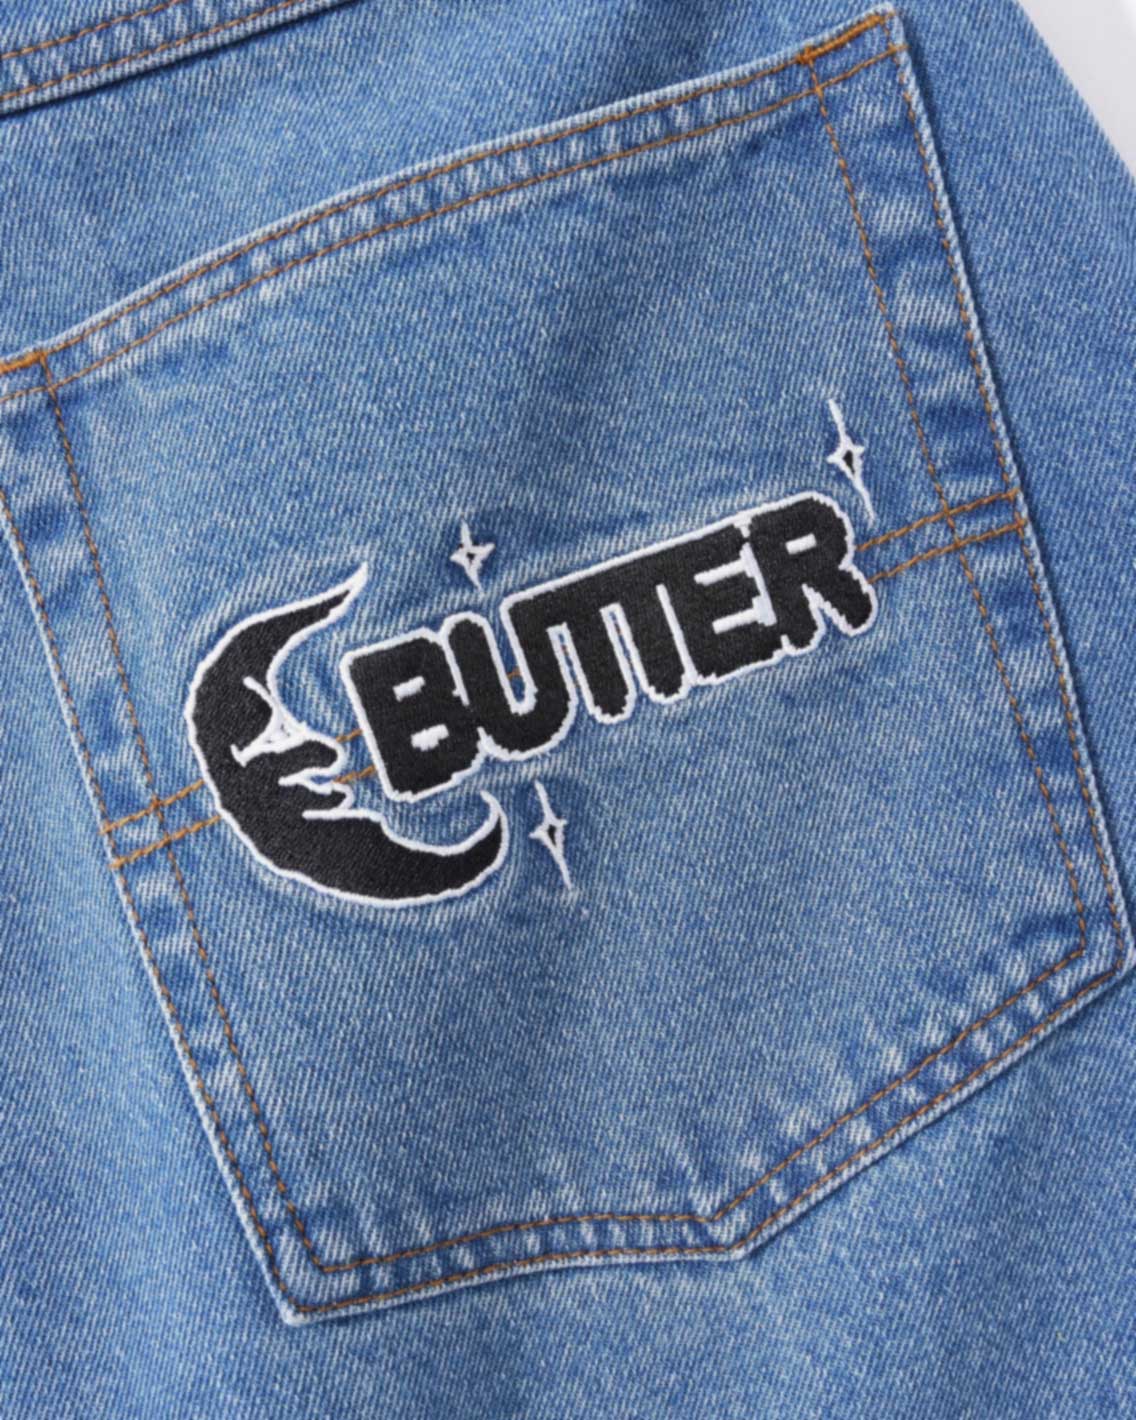 Butter Goods - Critter Denim Jeans - Washed Indigo